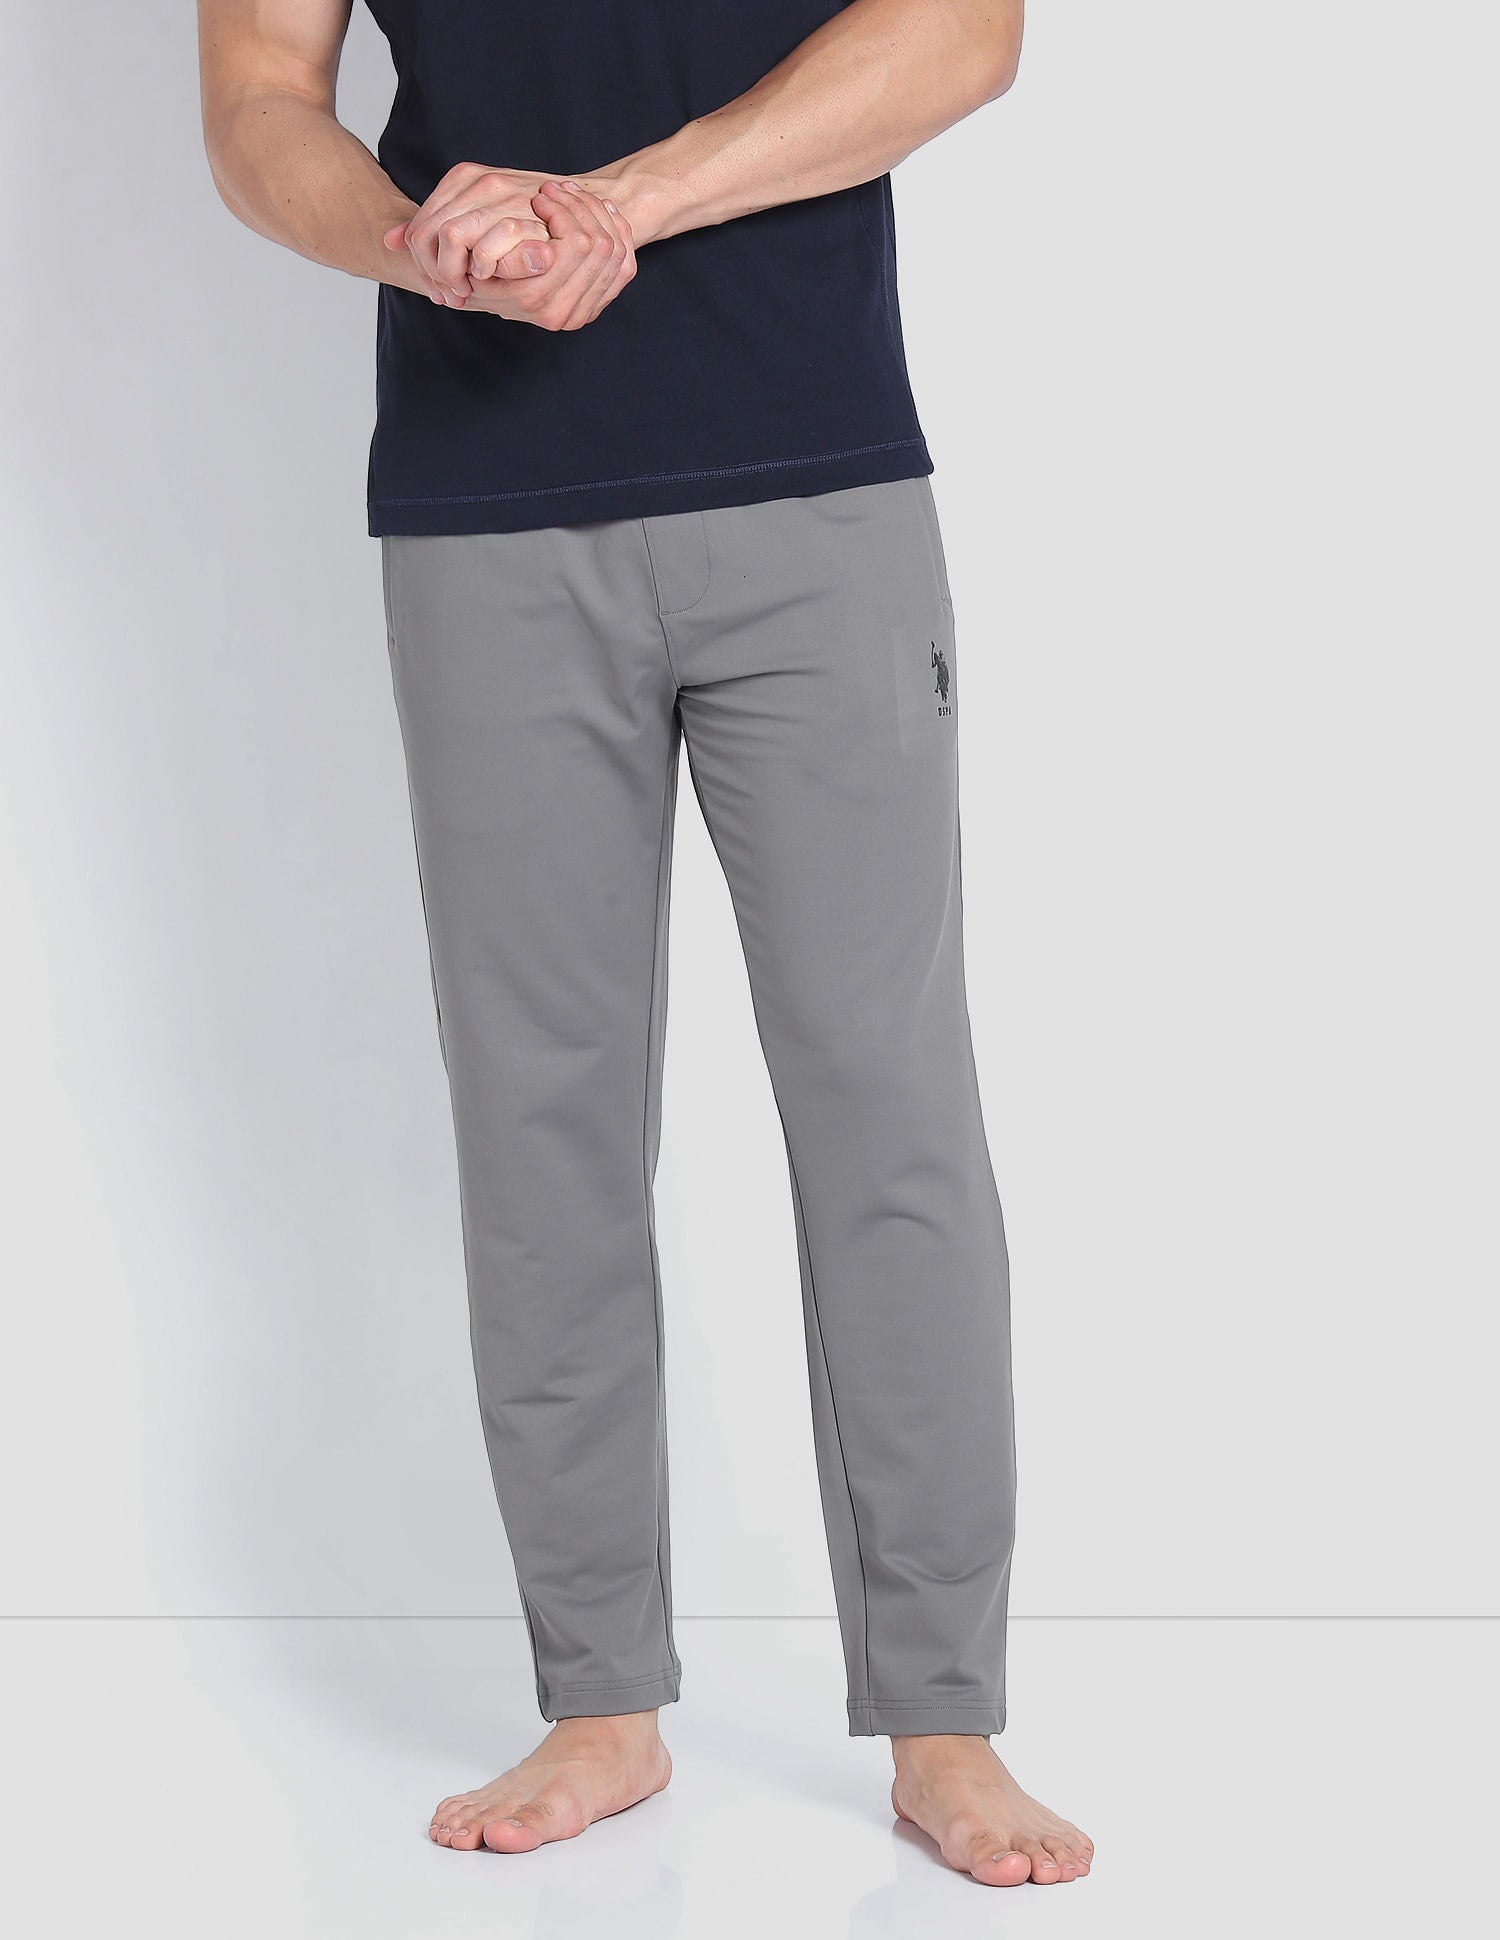 U S Polo Assn Grey Track Pants for Men #I631 at Rs 999.00, Sports Lower,  Sports Tack Pant, Lower Pants, Running Pants, ट्रैक पैंट - Zedds, New Delhi